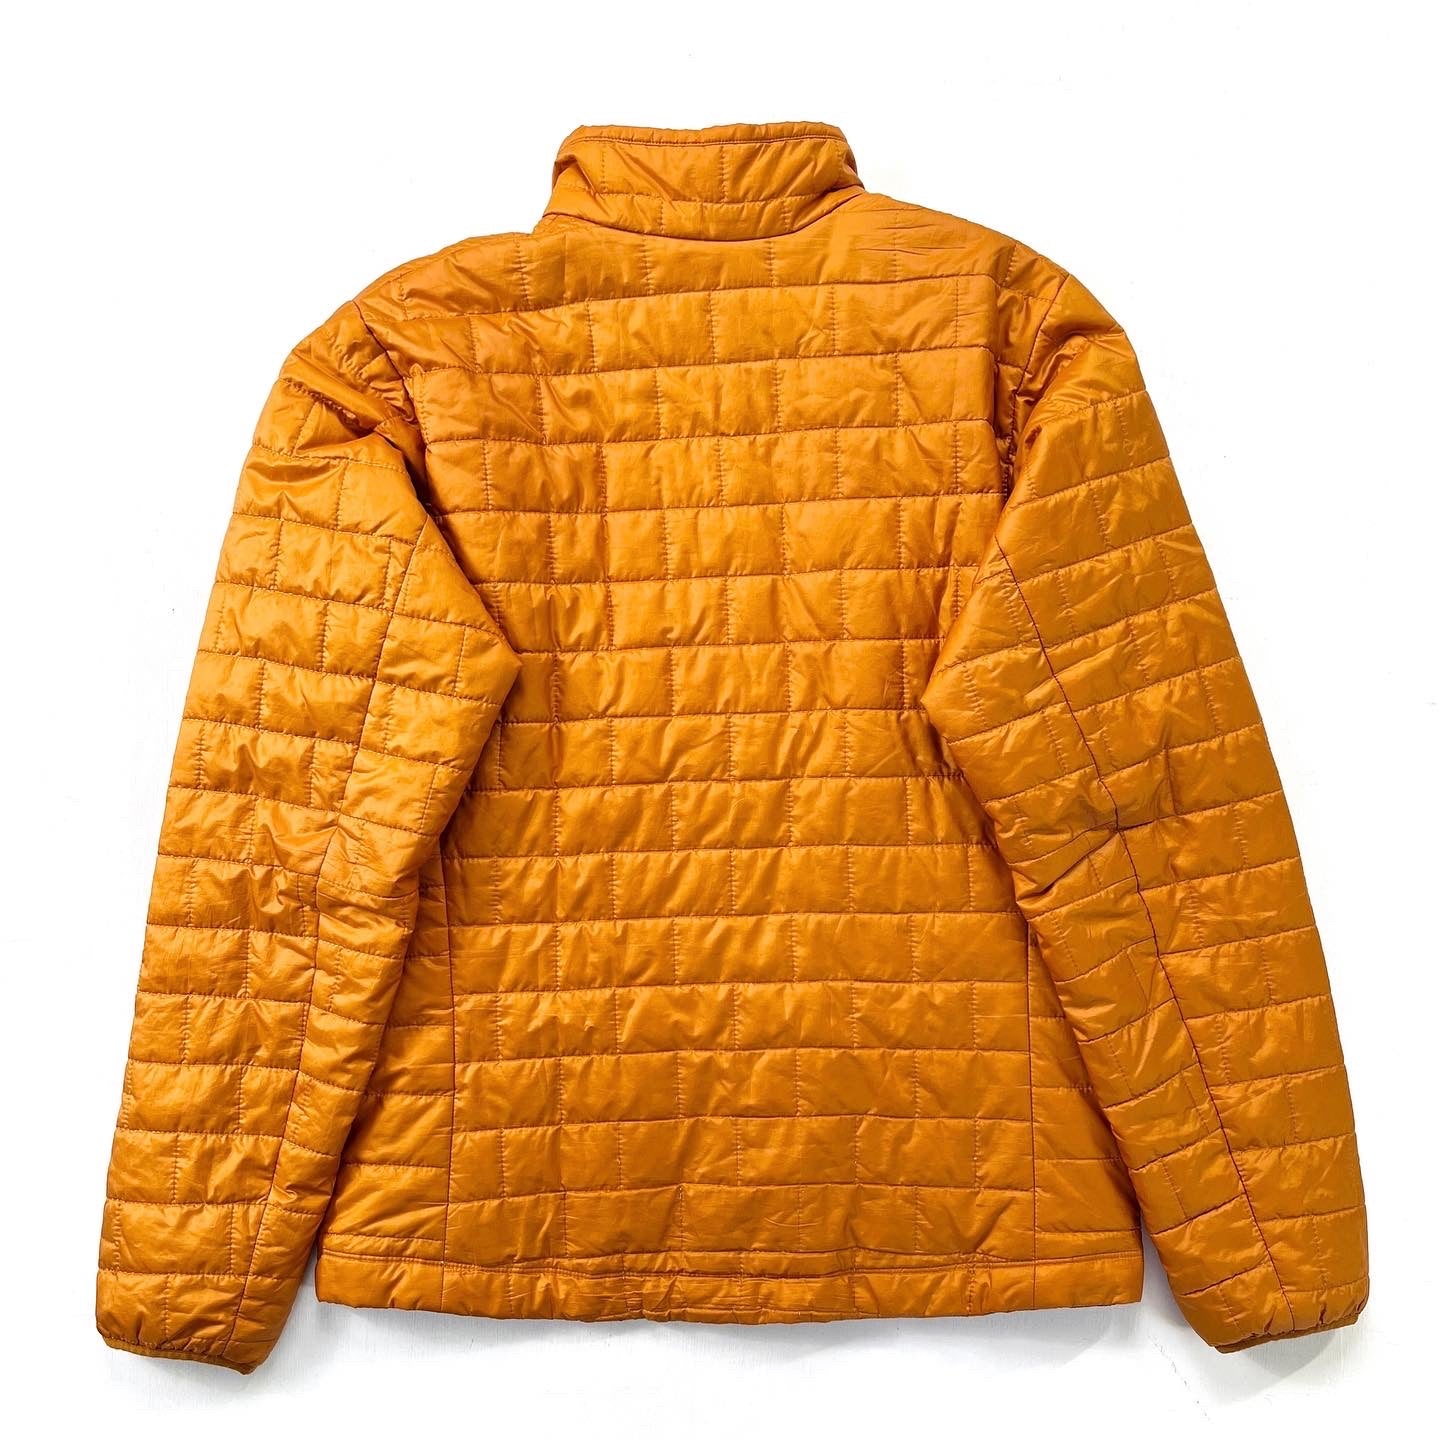 2019 Patagonia Nano Puff Insulated Jacket, Hammonds Gold (M)